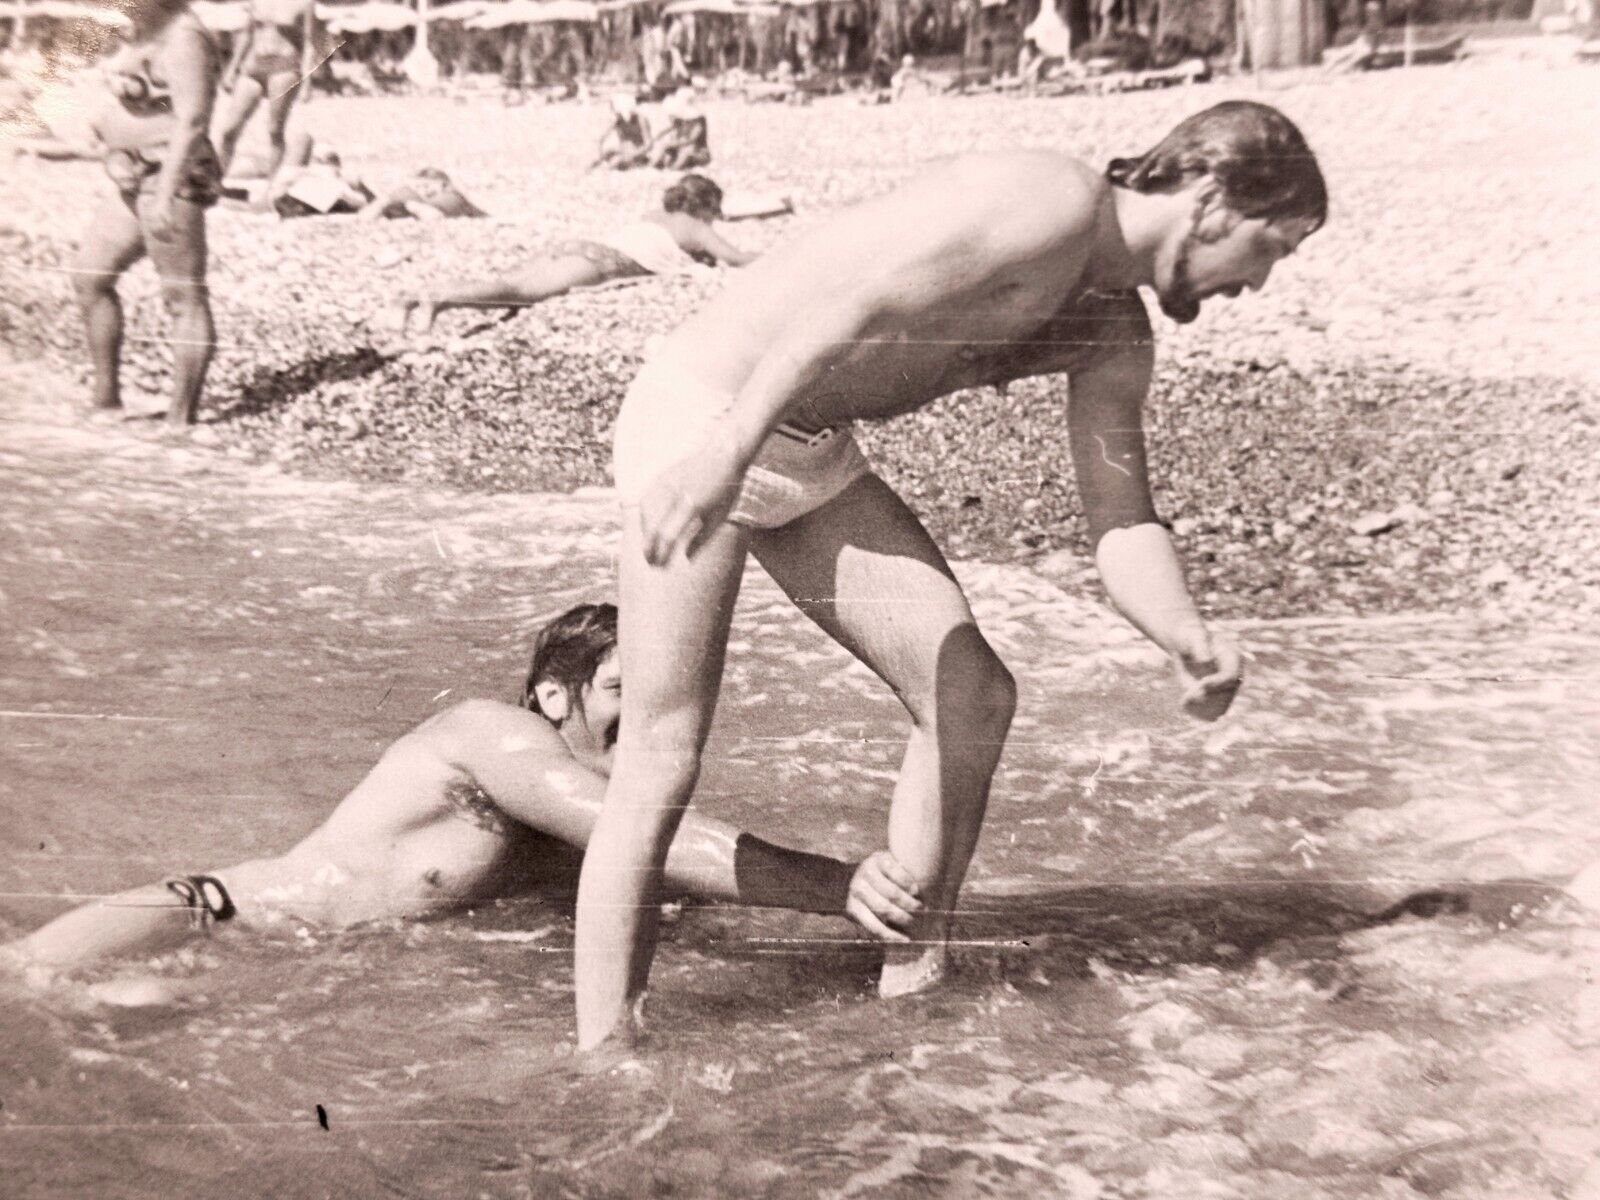 1970s Shirtless Men Affectionate Guys Bulge Trunks Beach Gay in Vintage Photo